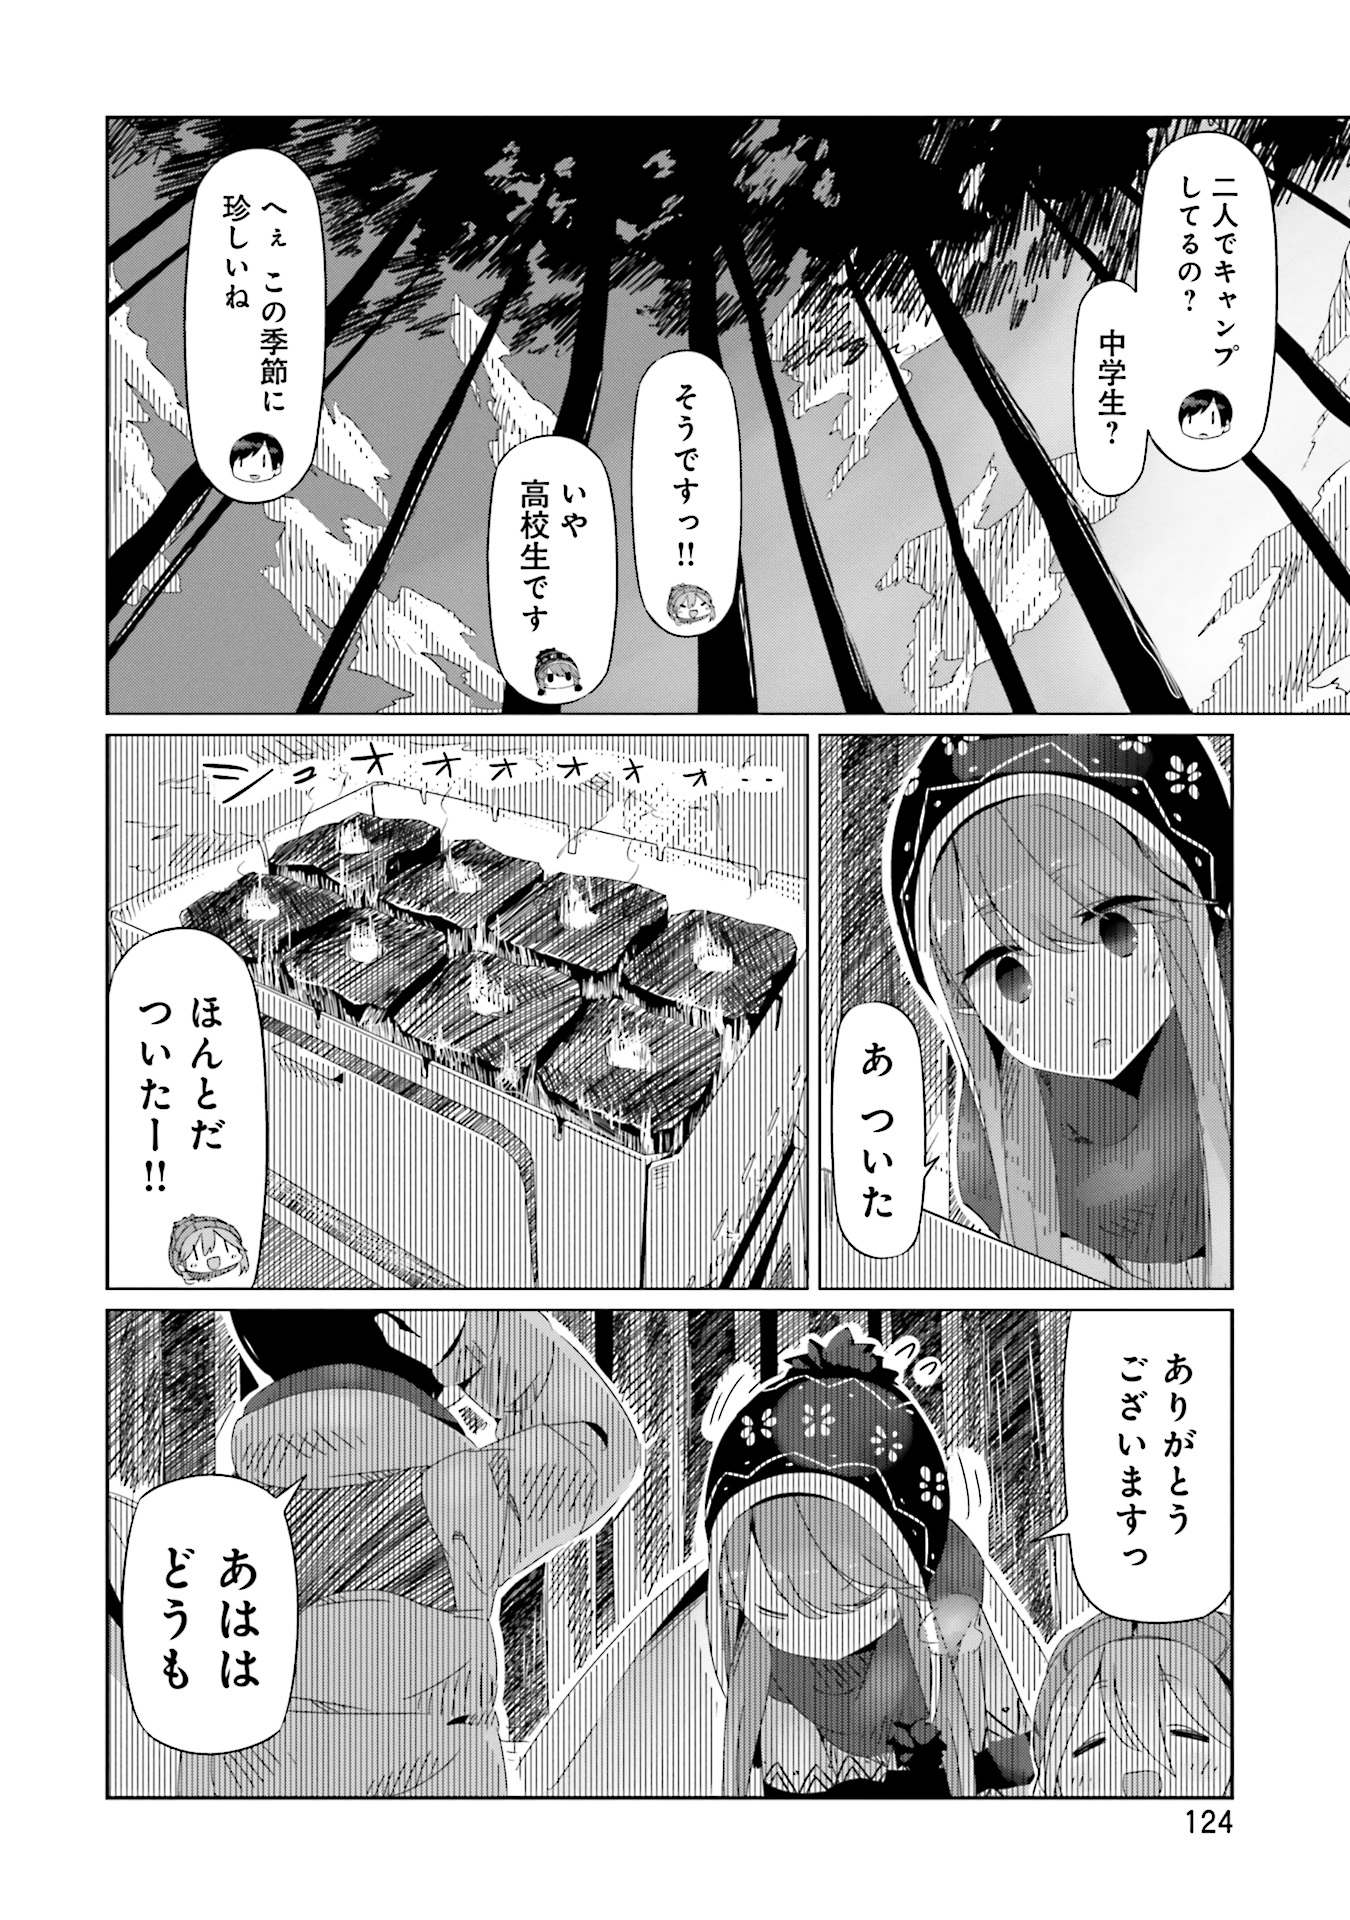 Yuru Camp - Chapter 11 - Page 23